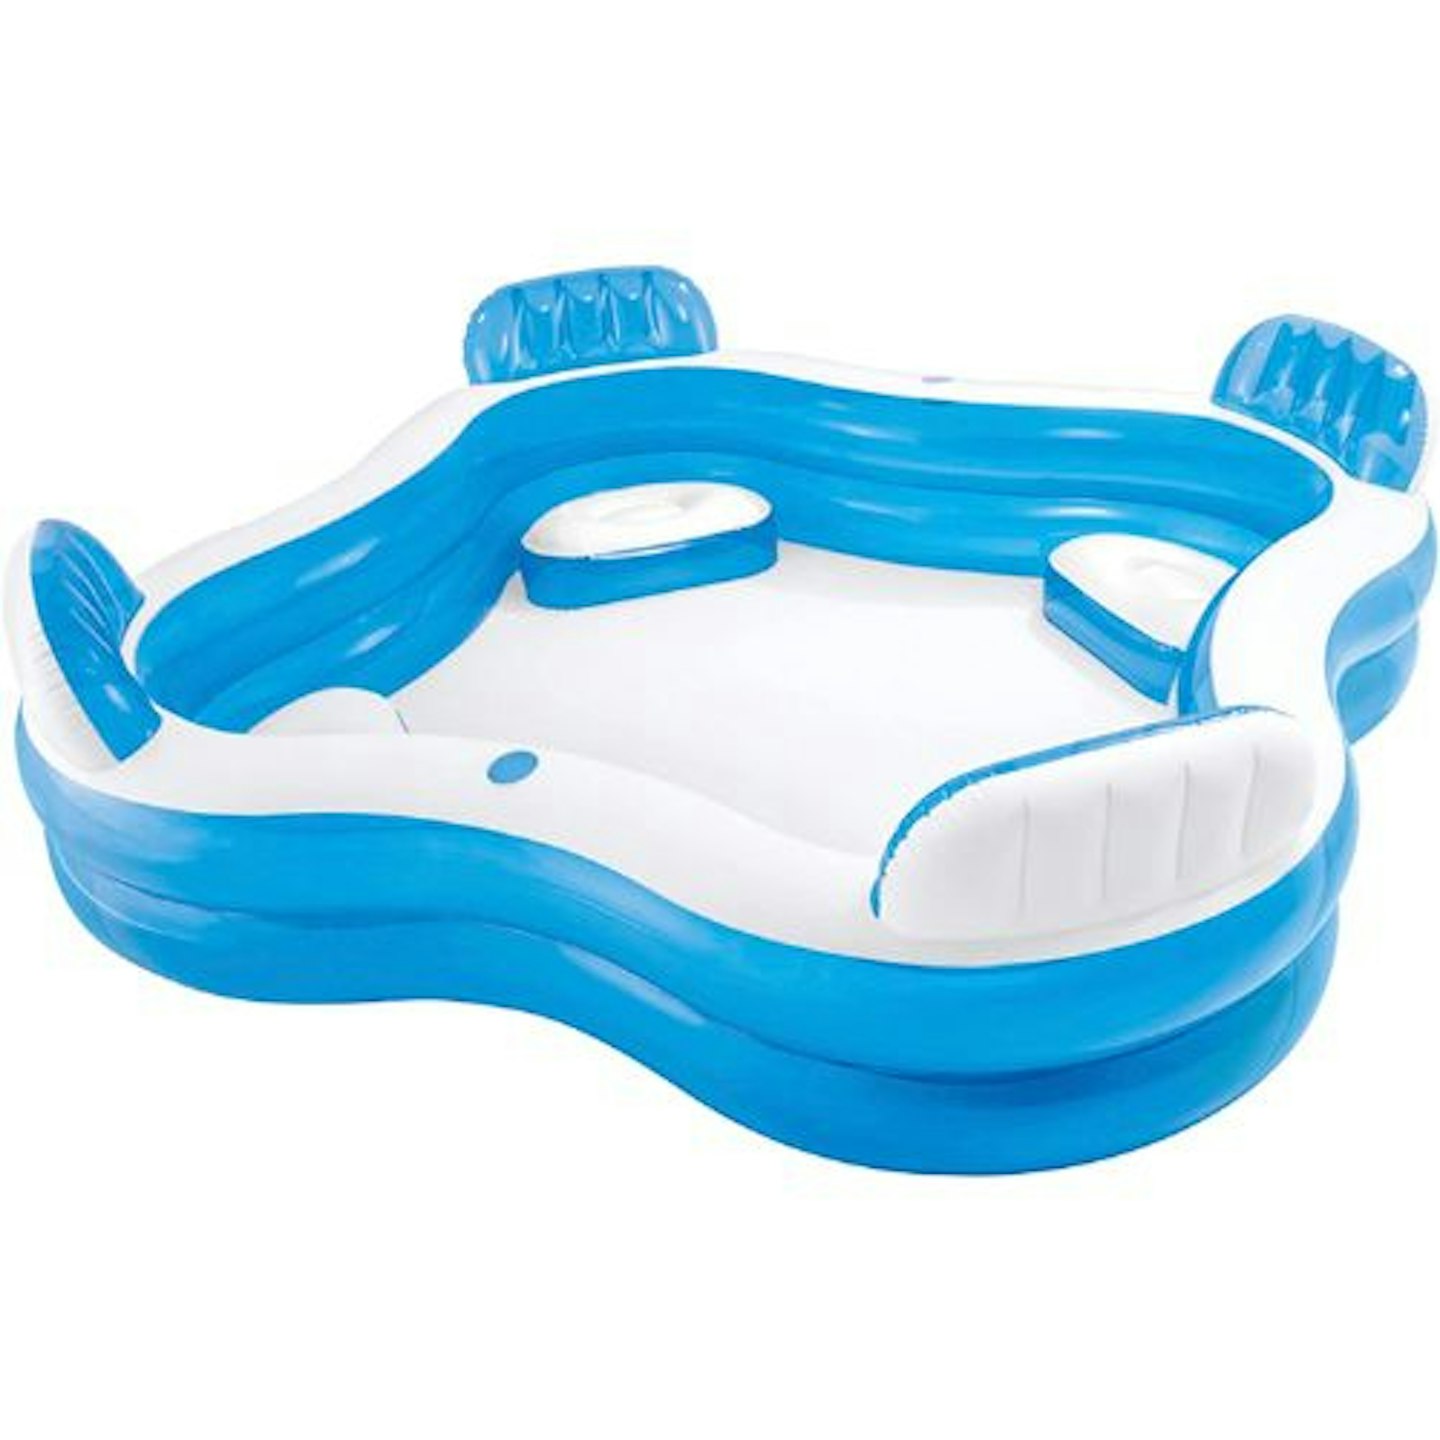 Intex Inflatable Swim Center Family Lounge